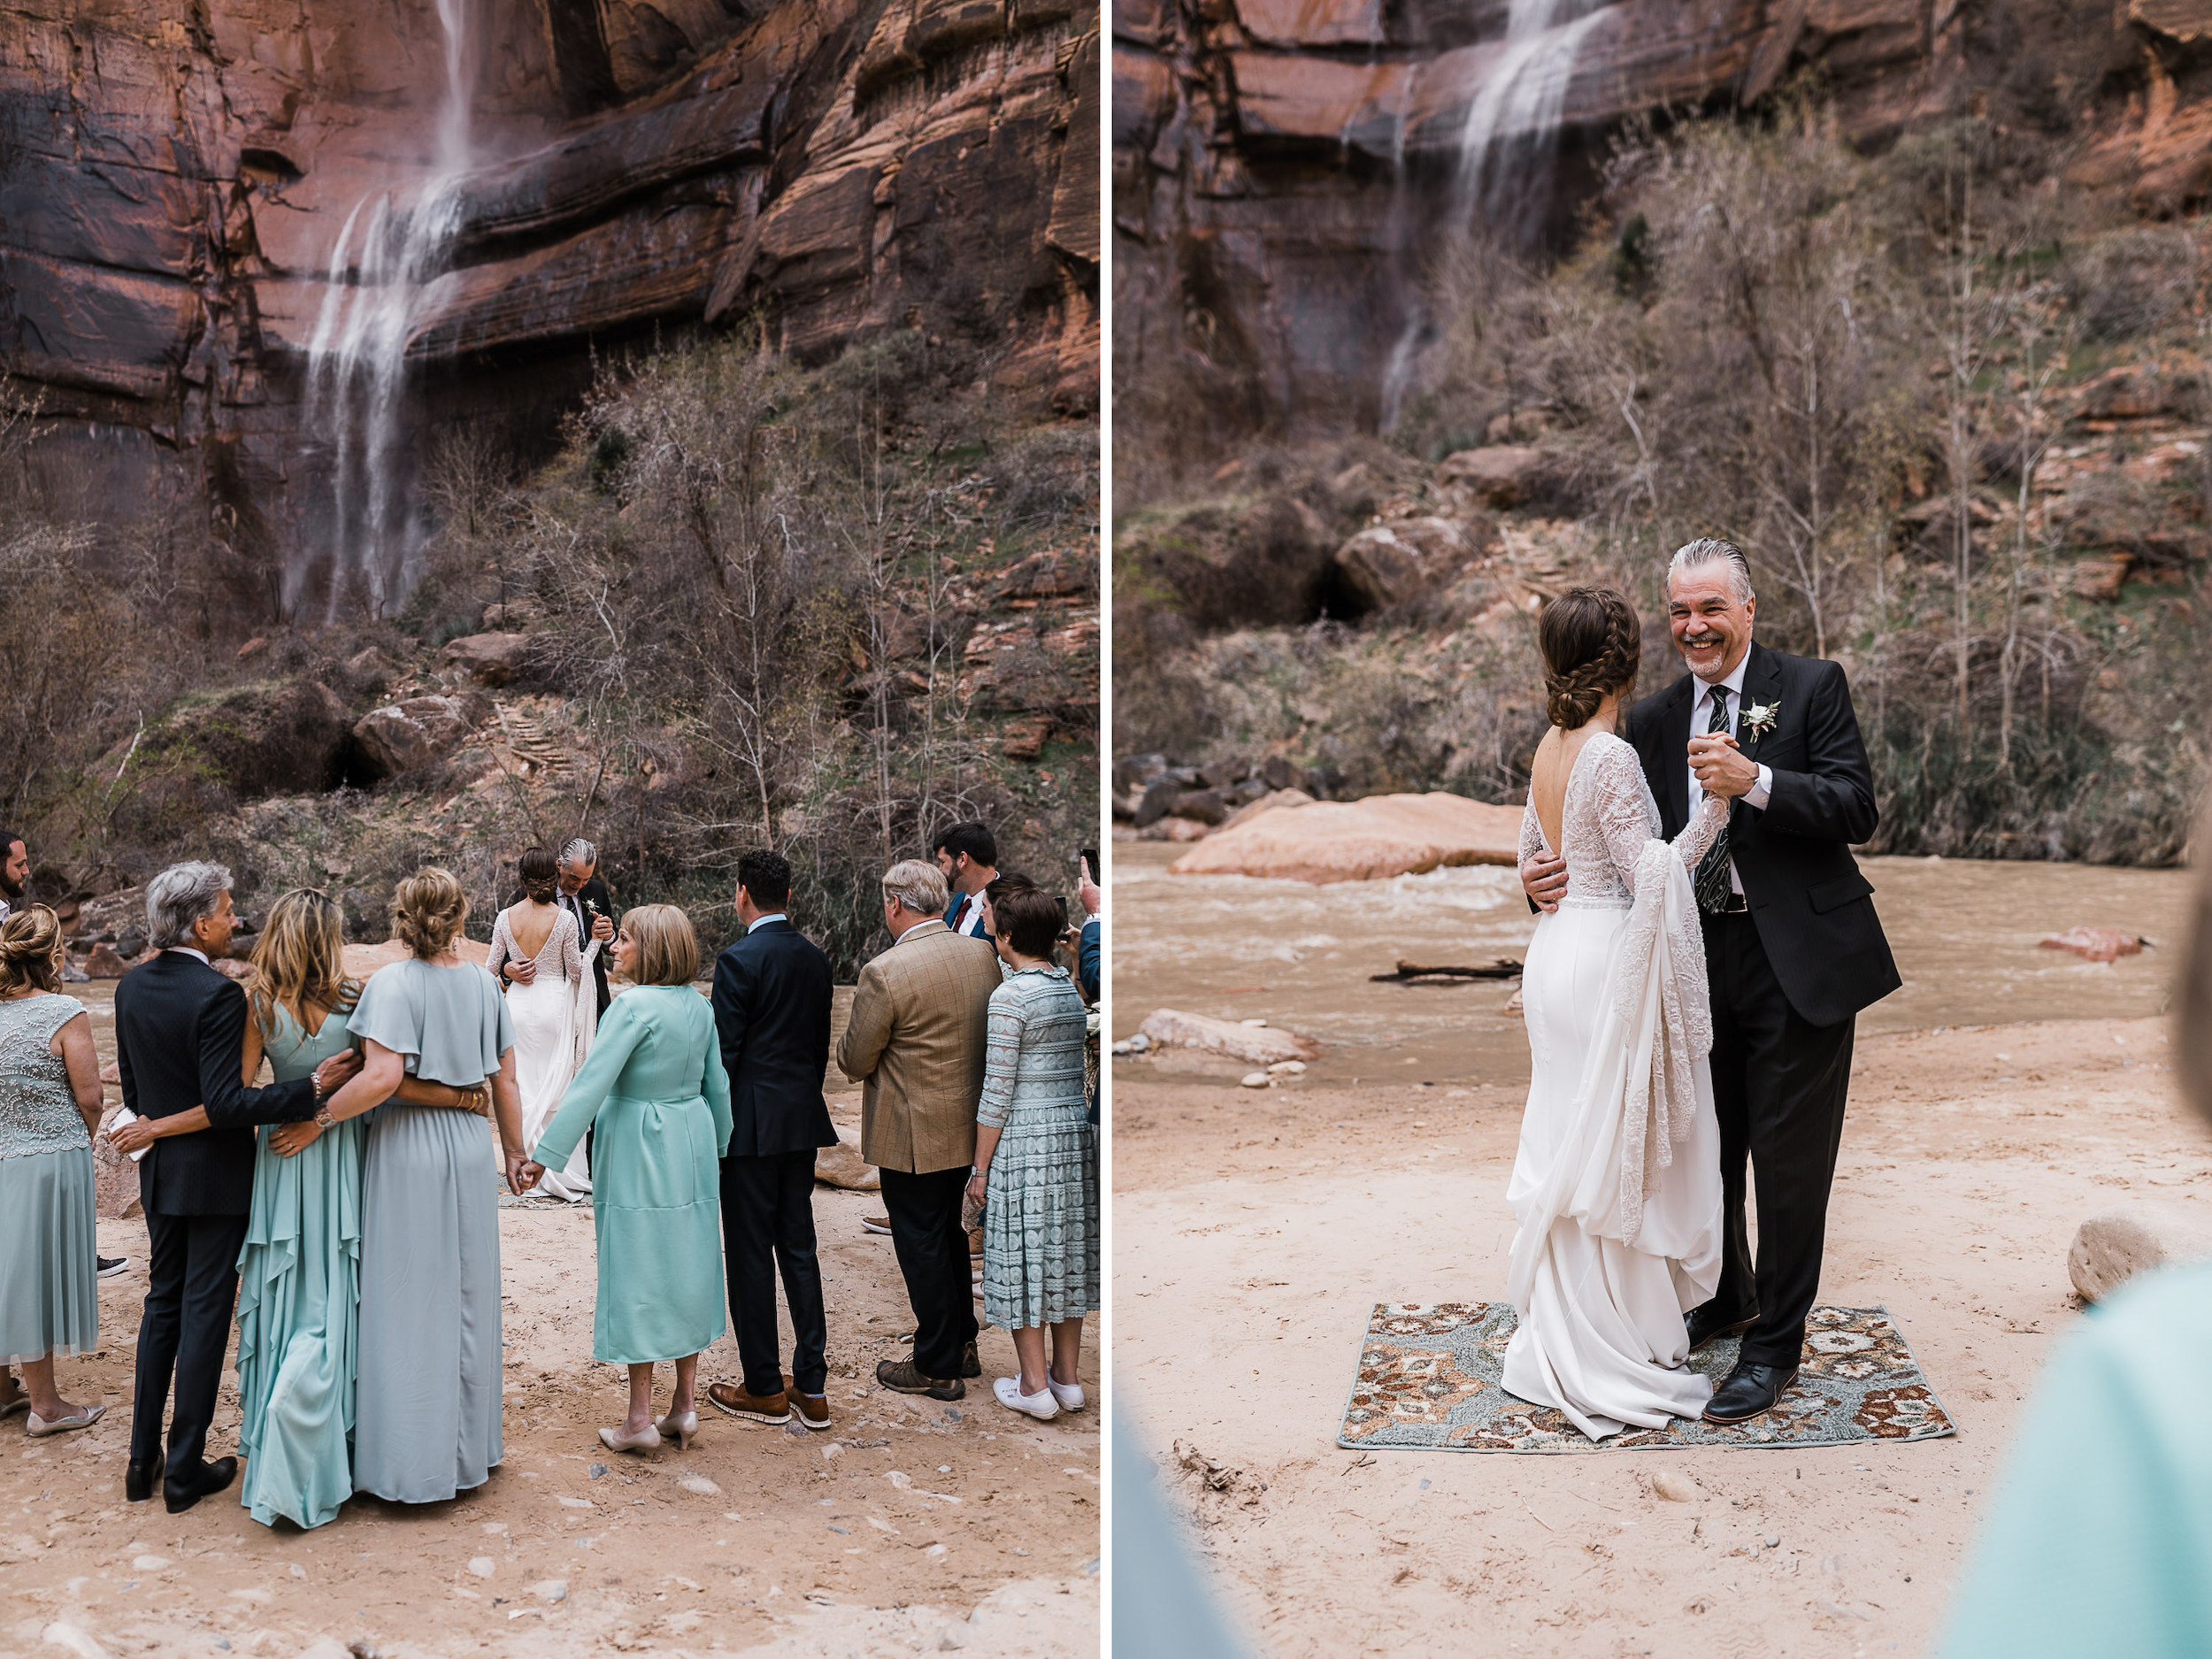 Zion-National-Park-Adventure-Wedding-Hearnes-Elopement-Photography-20.jpg